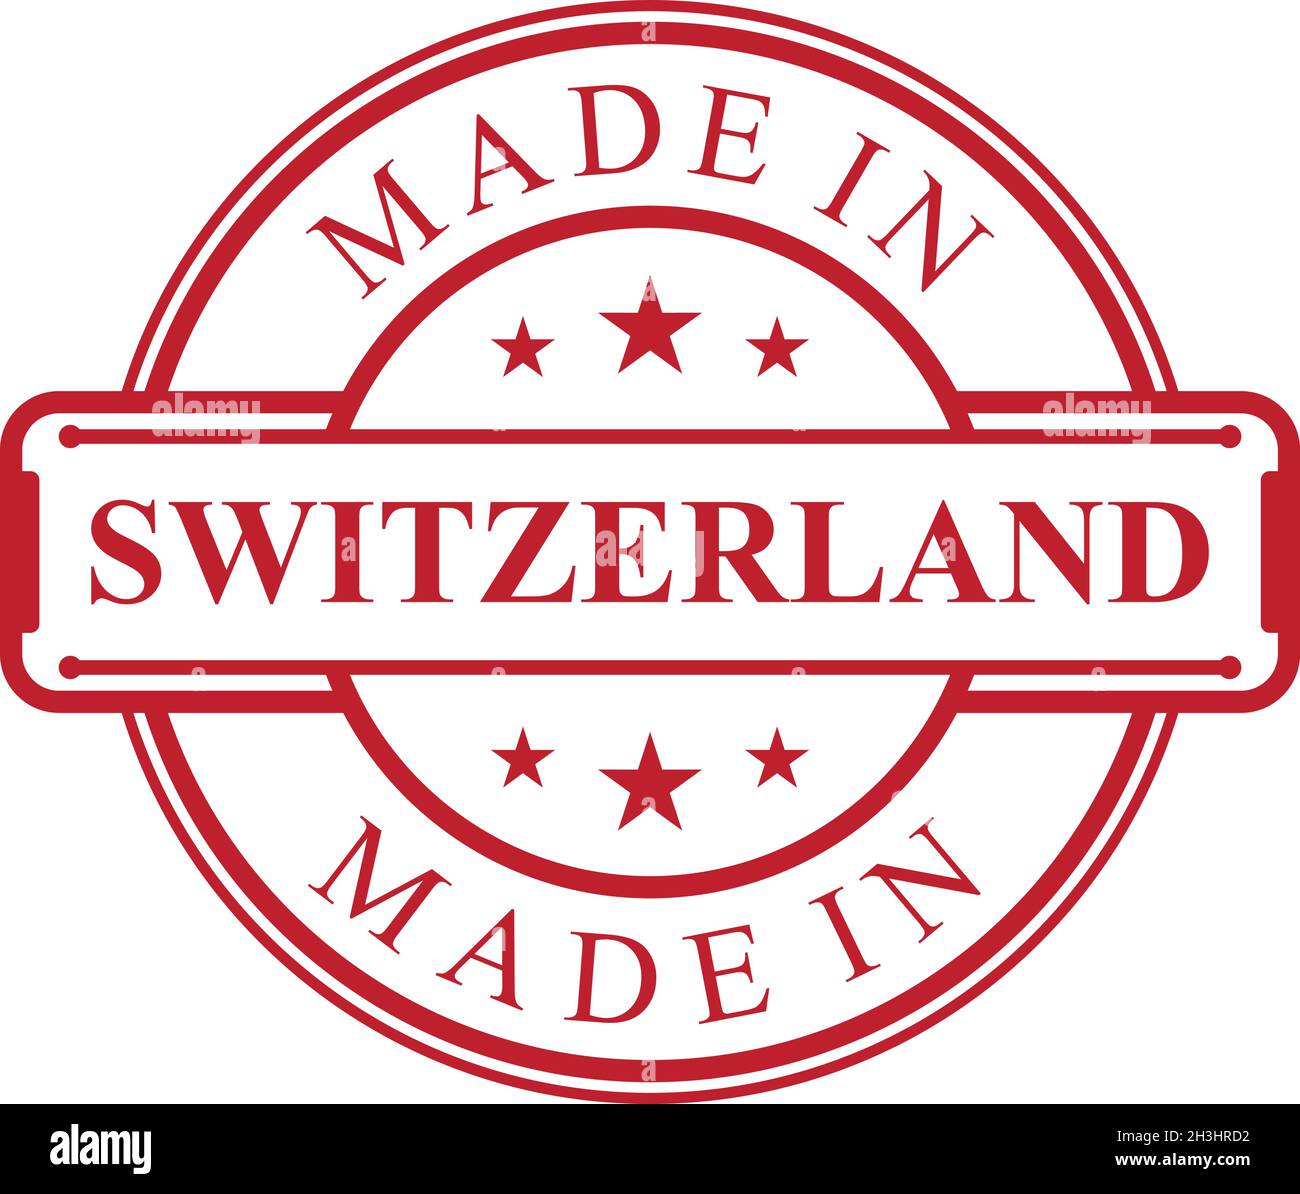 Made in Switzerland Label Icon mit rotem Farbemblem auf weißem Hintergrund.  Vektor-Qualität Logo Emblem Design-Element. Vektorgrafik EPS.8 EPS  Stock-Vektorgrafik - Alamy